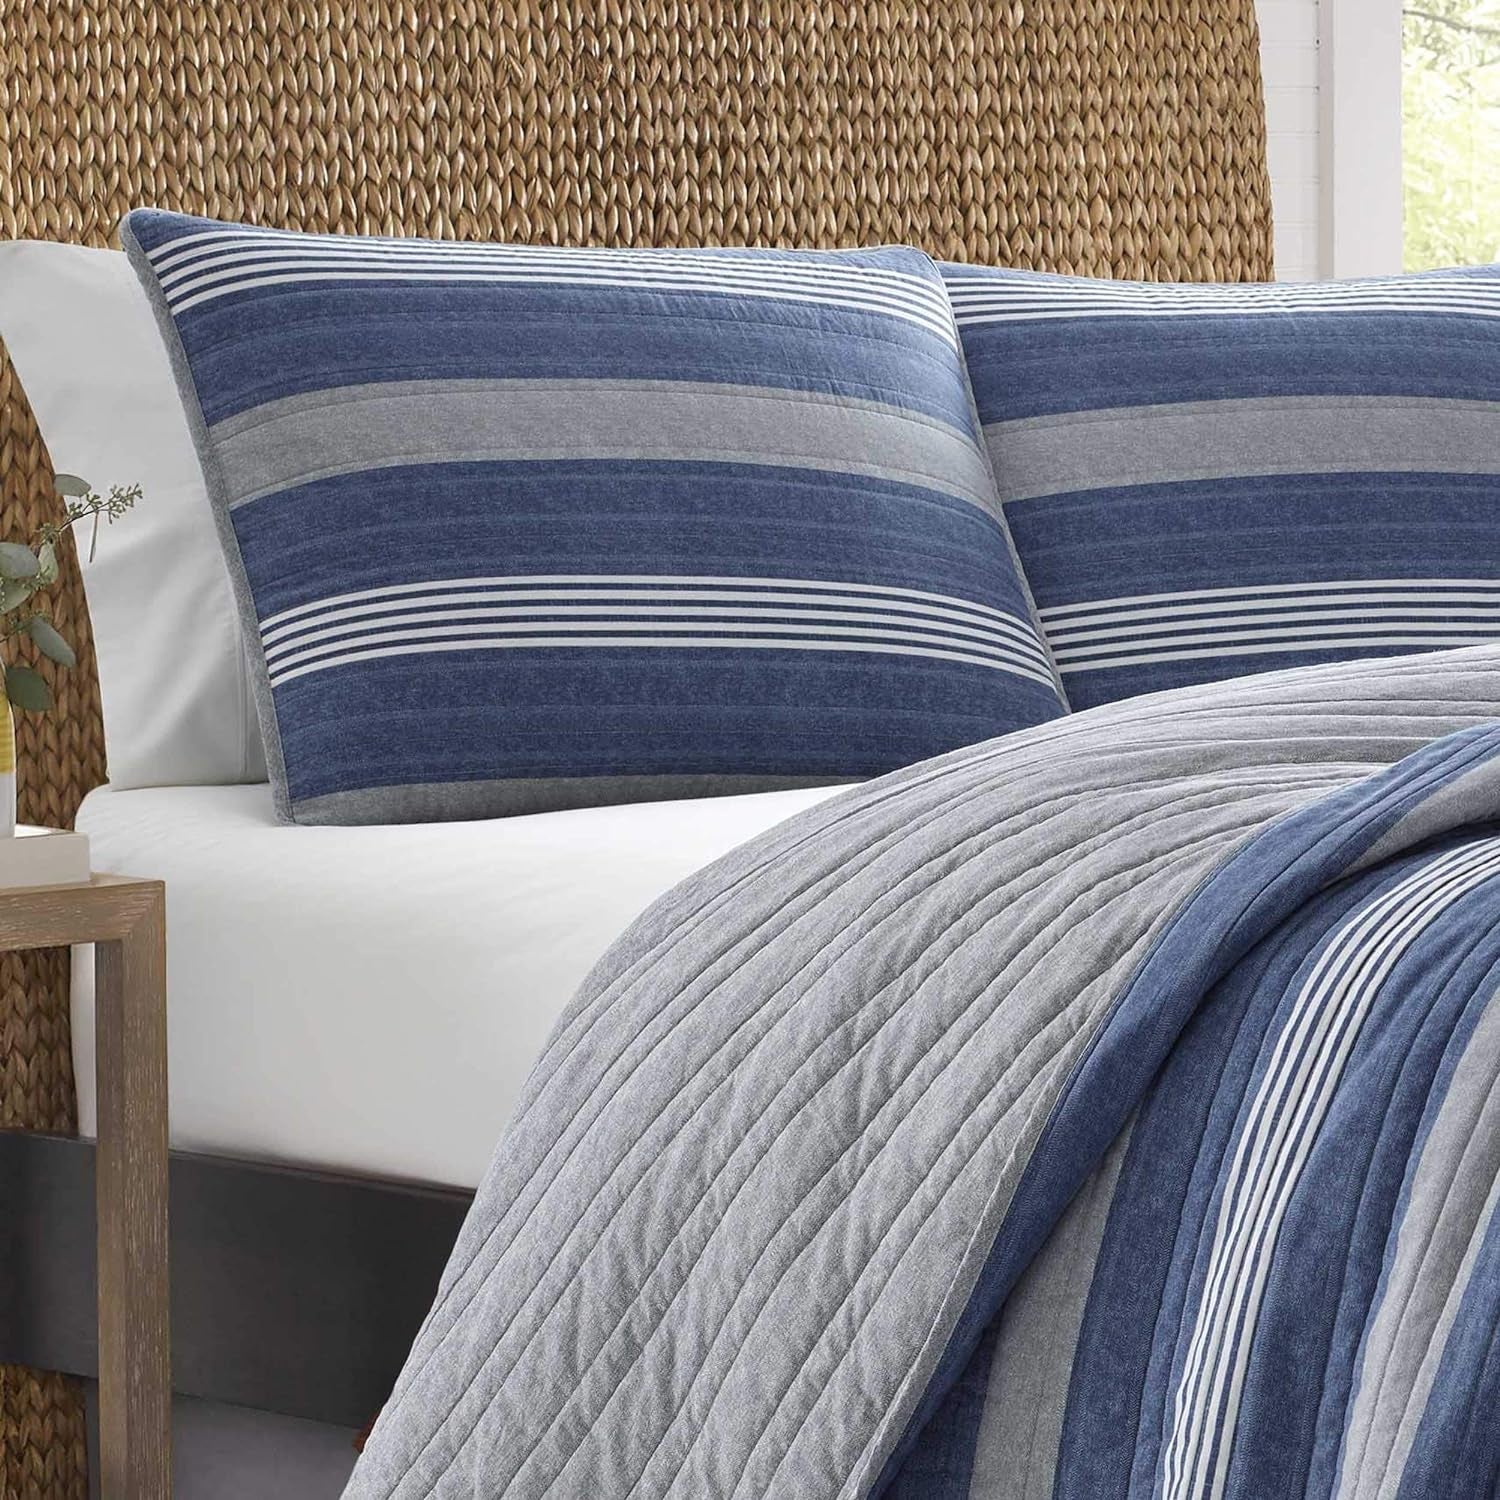 Nautica - Queen Quilt Set, Cotton Reversible Bedding with Matching Shams, Home Decor for All Seasons (Saltmarsh Blue, Queen)